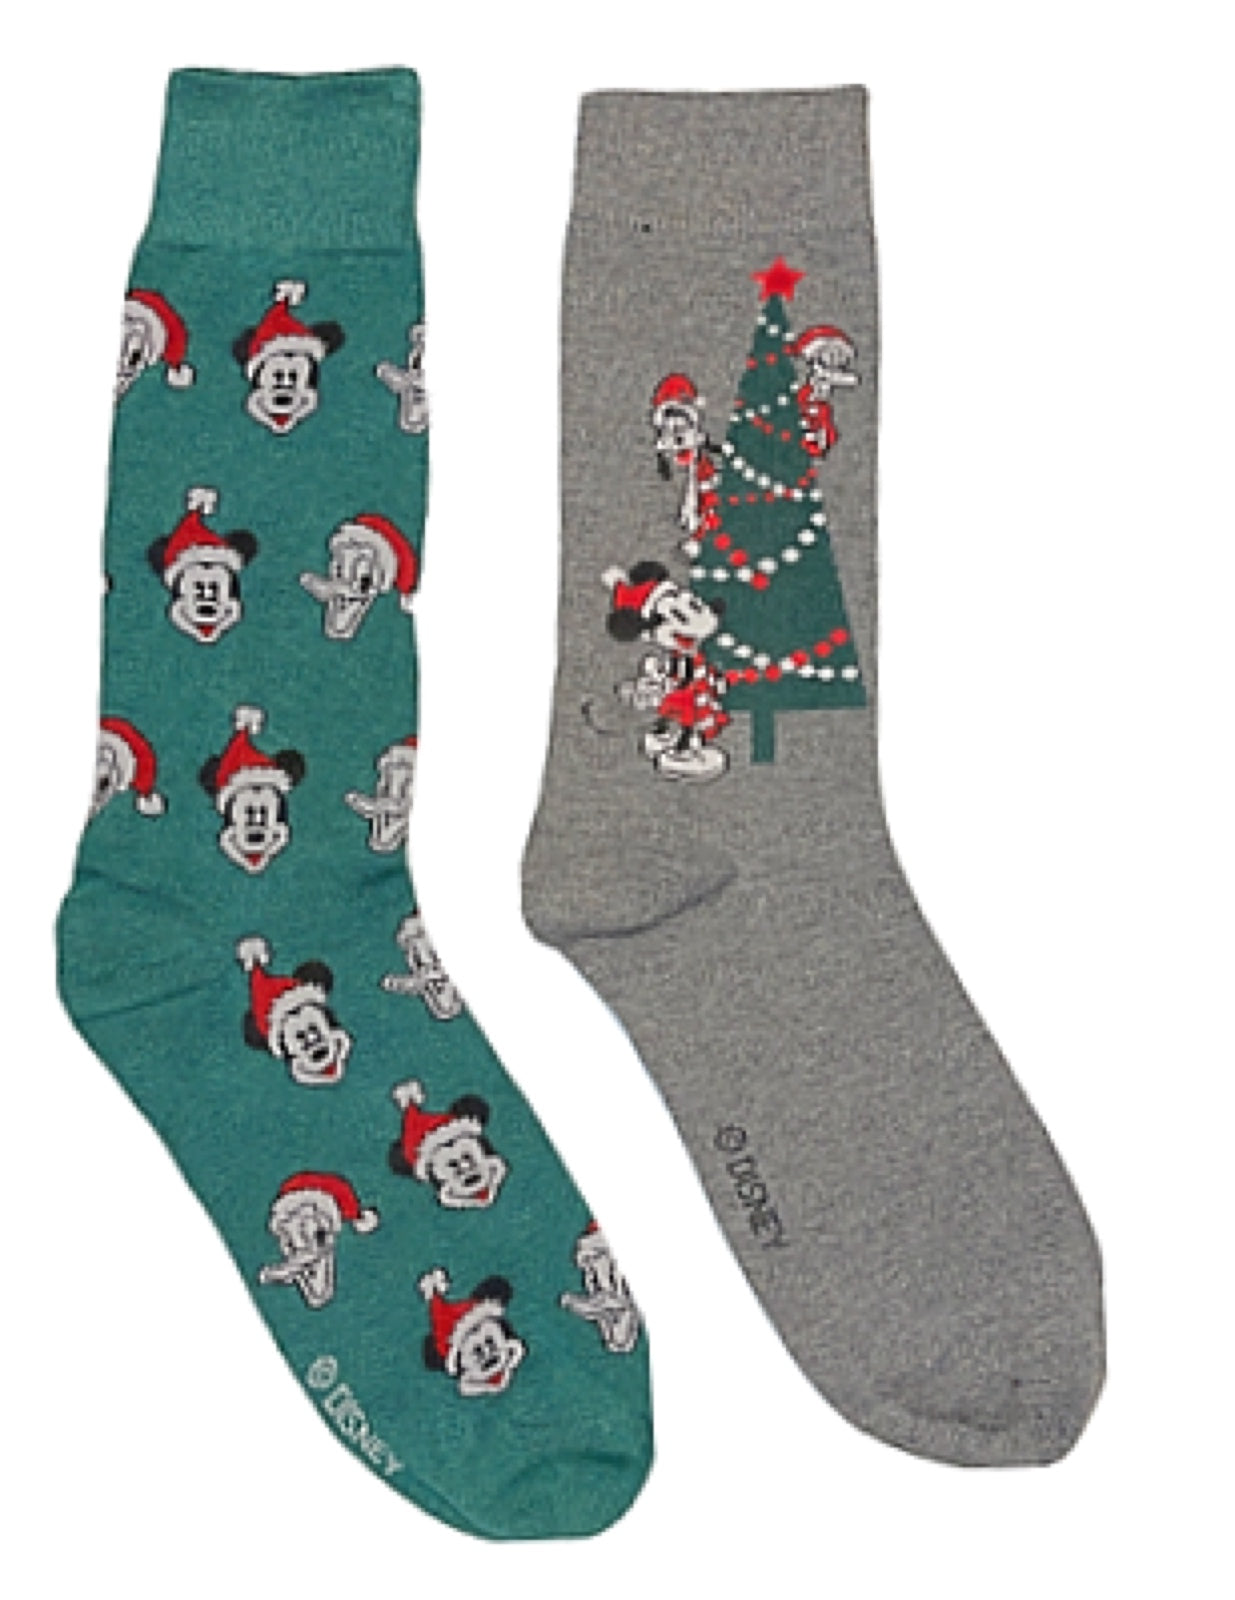 Disney Mens Socks, 5 Pack Novelty Socks, Pluto Donald Goofy Disney Gifts